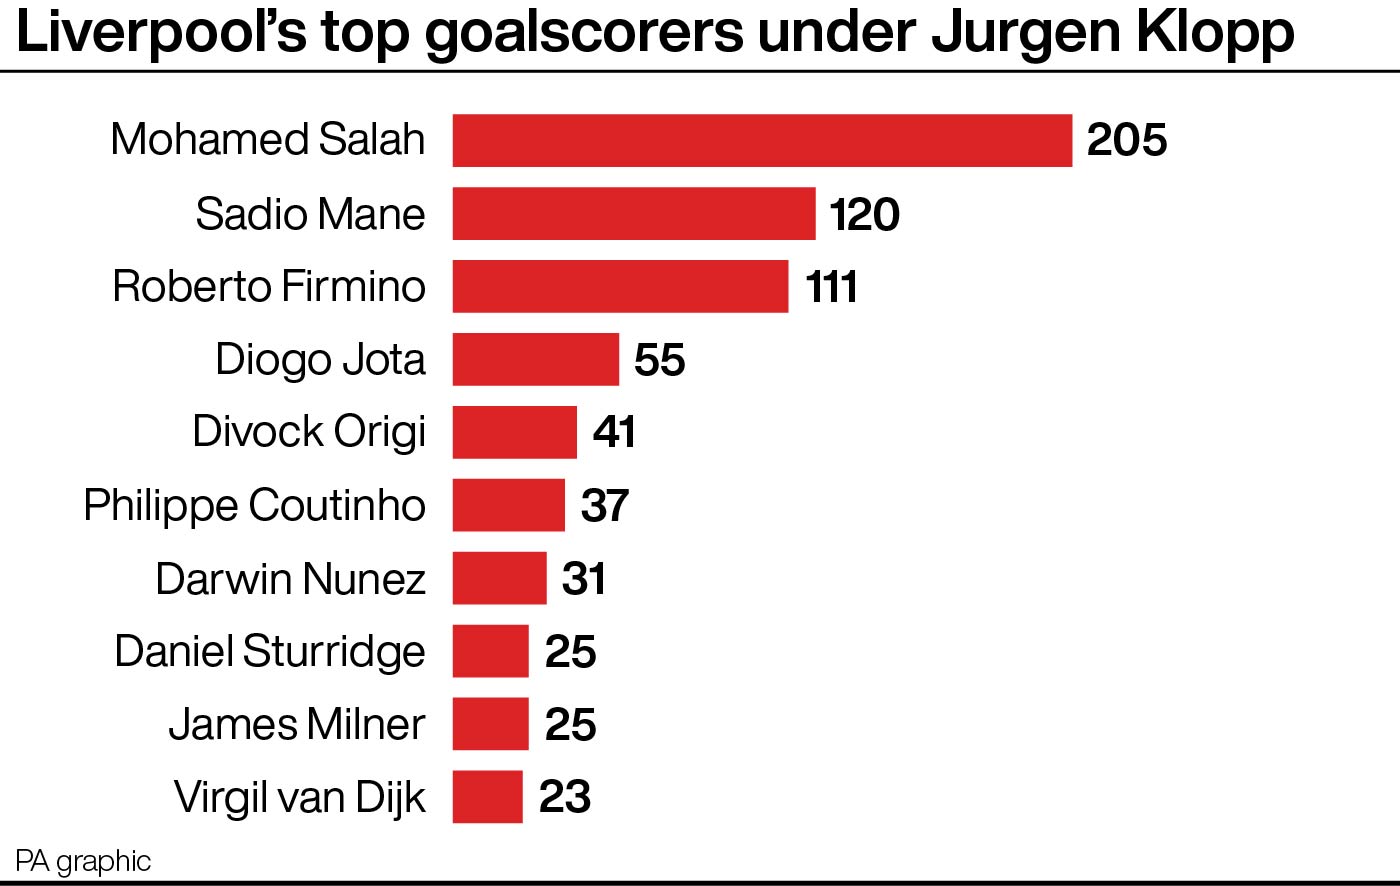 Liverpool's top goalscorers under Jurgen Klopp